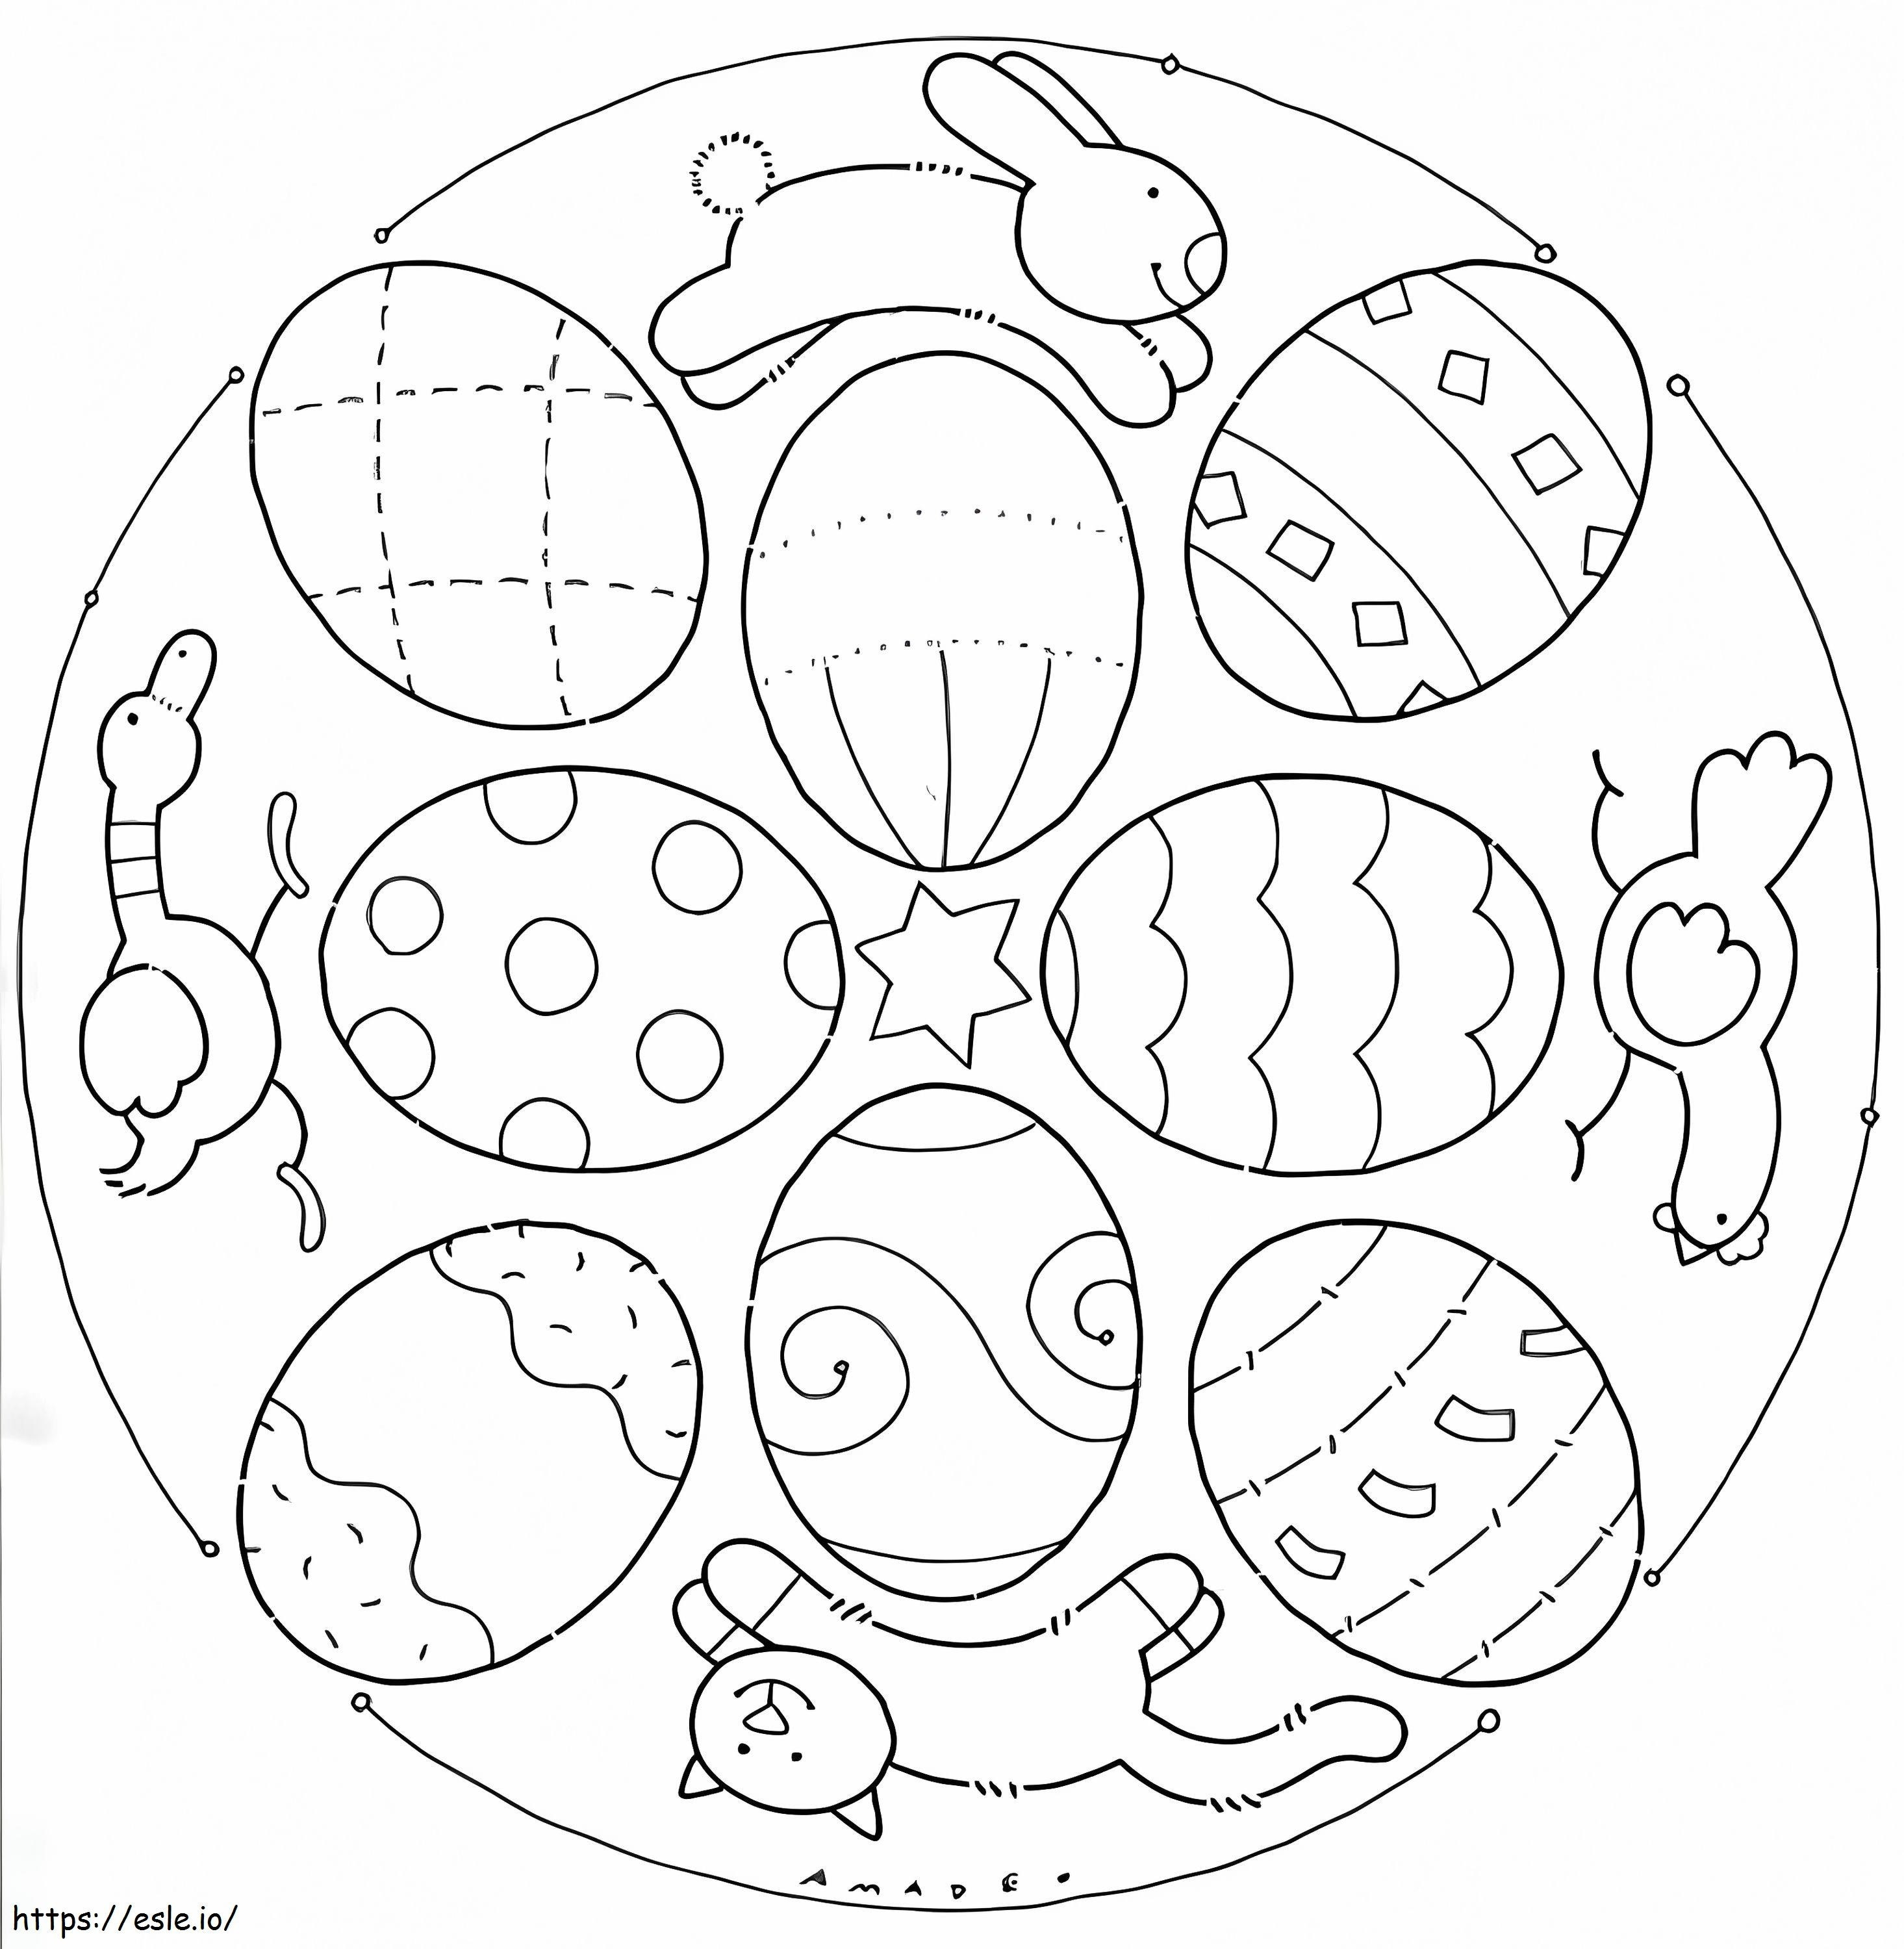 Easter Mandala 8 coloring page